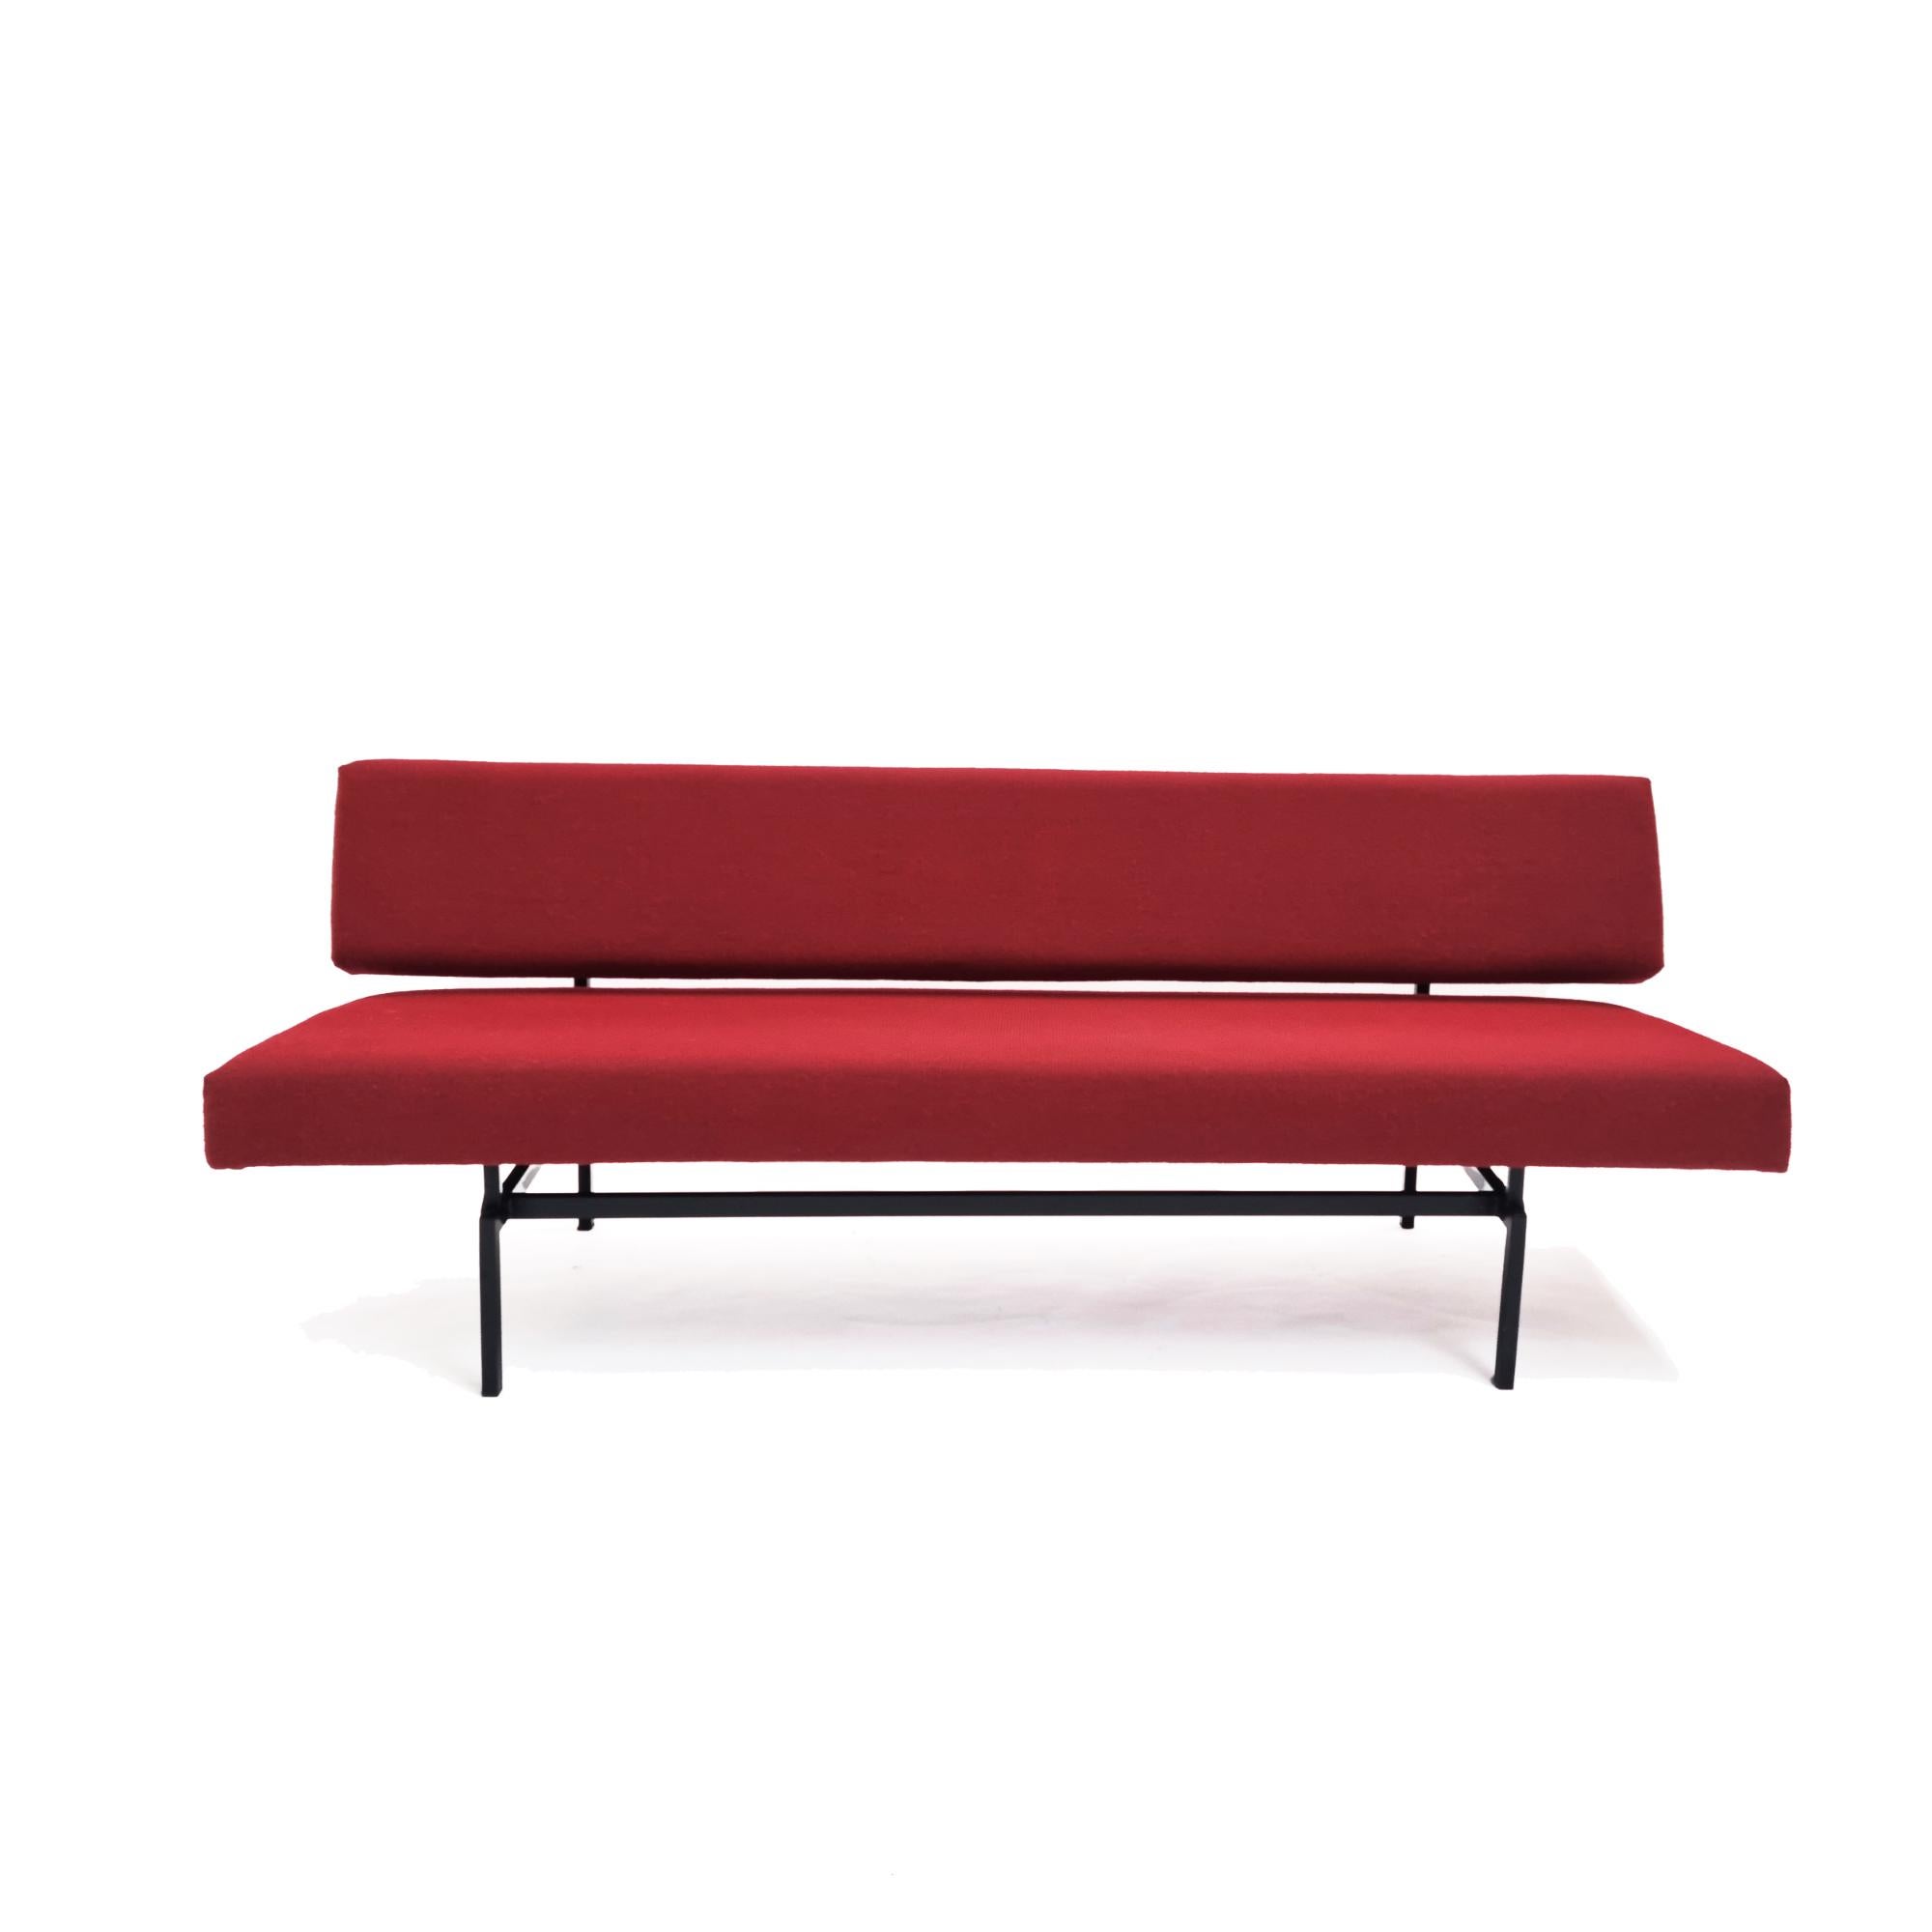 Mid-Century Modern Sleeping Sofa by Martin Visser for ‘t Spectrum, 1960s For Sale